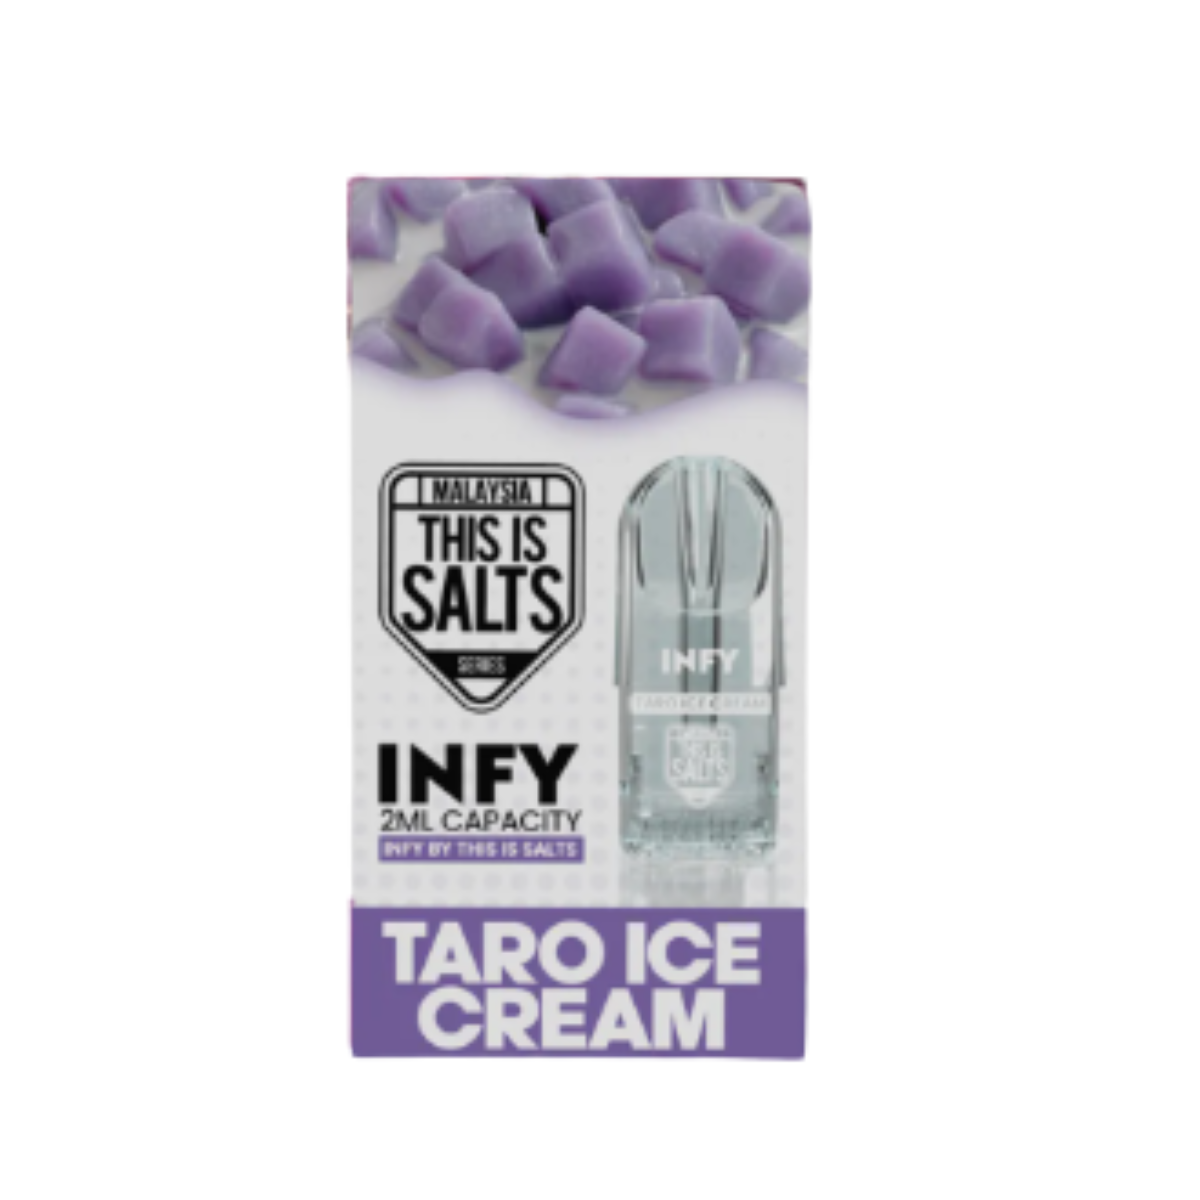 This Is Salts Infy Nicotine Vape Pod - Taro Ice Cream - 2ml